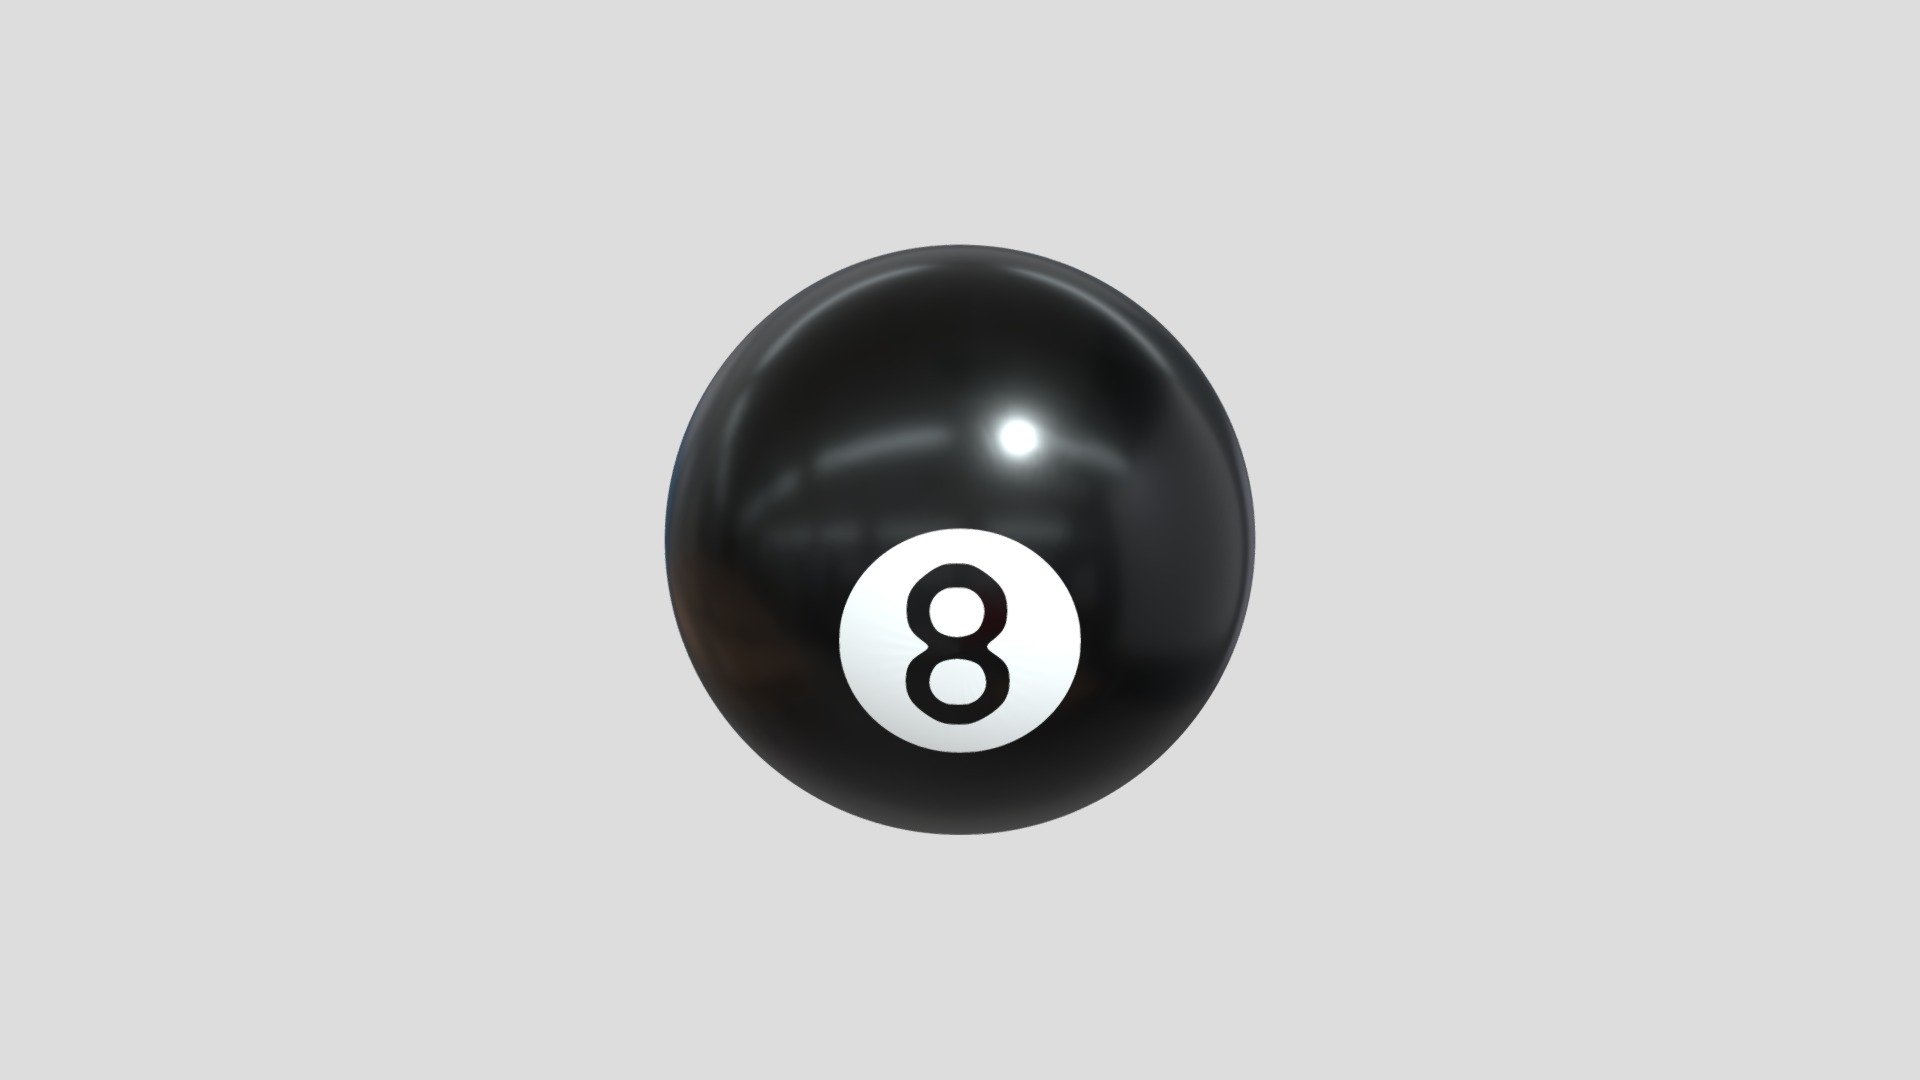 🎱 Emoji biliardo / pool 8 ball